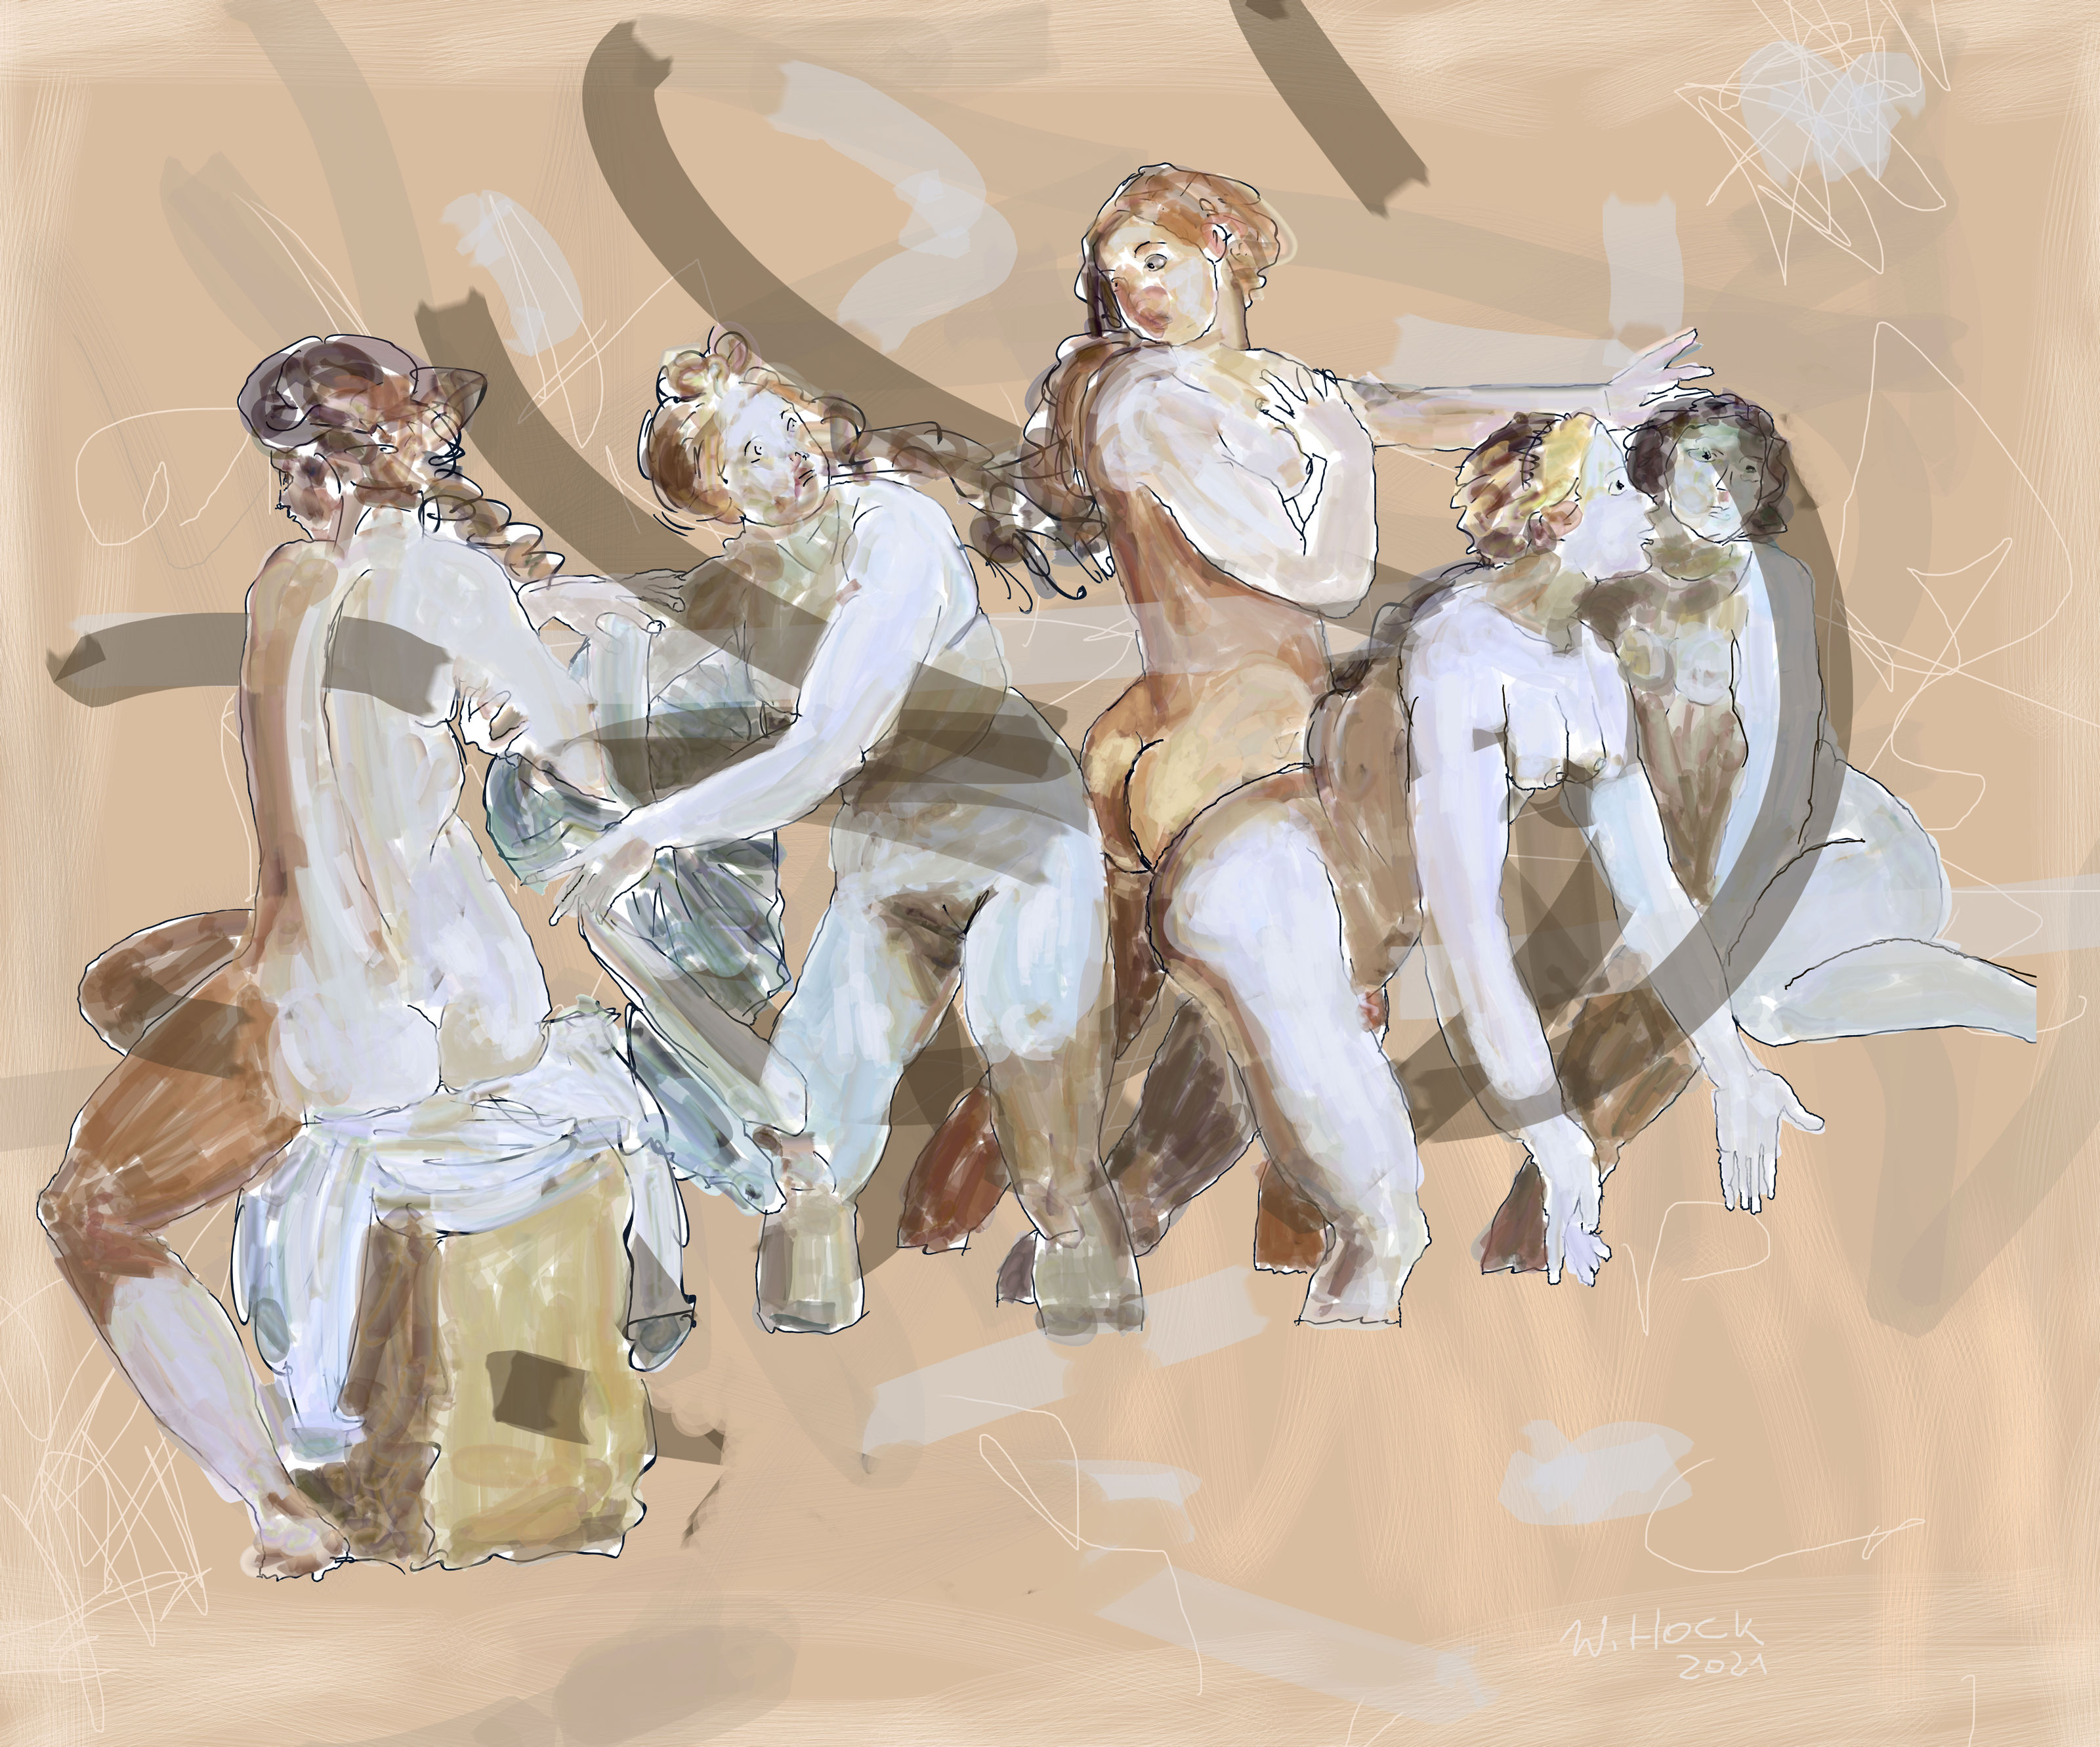 Badende IV - Bathers IV - Banhistas IV 2021   Handmade digital painting with collage on canvas 120 x 100 cm (213 megapixels)